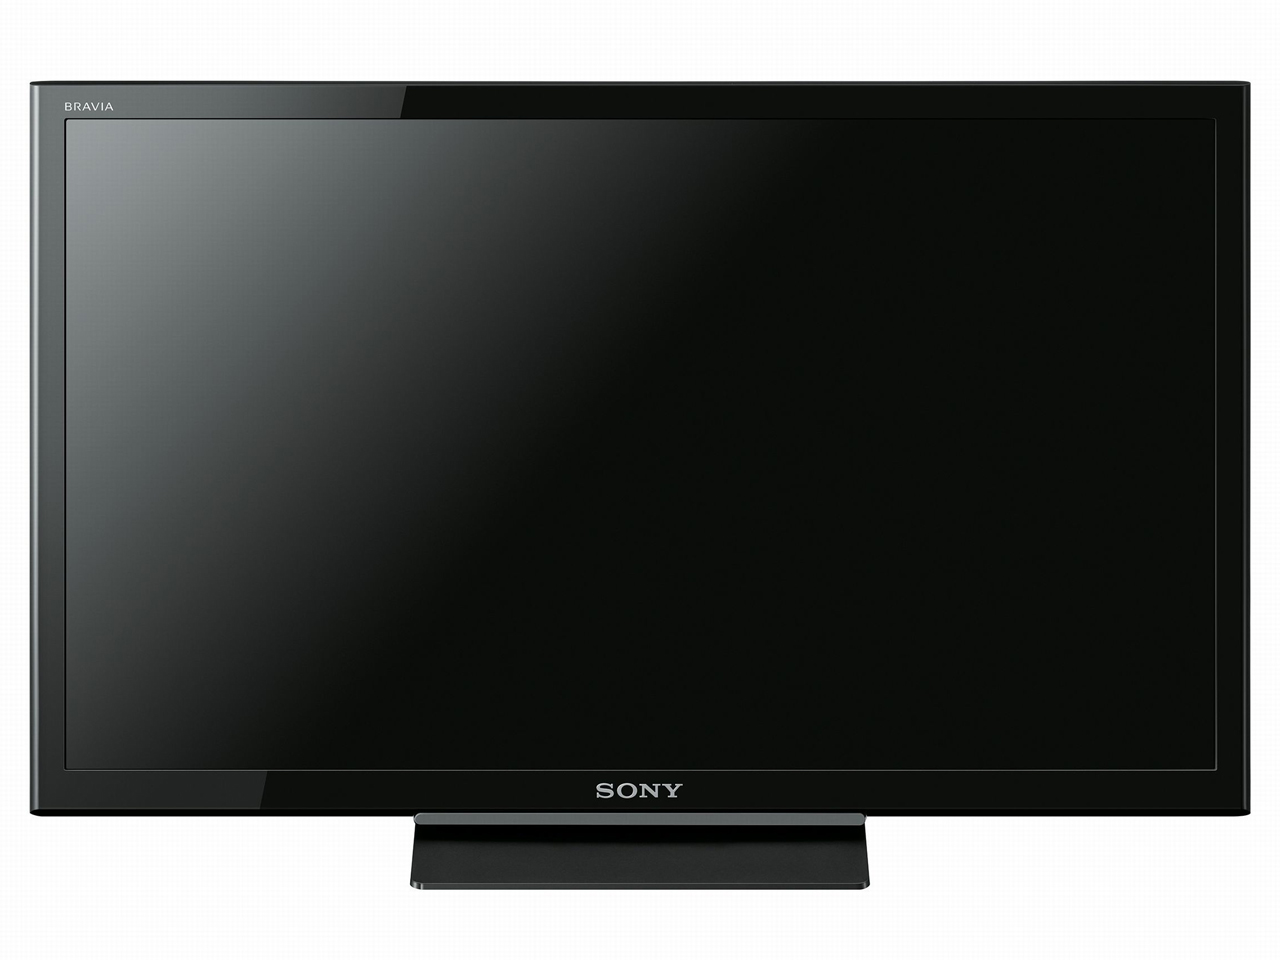 SONY ソニー 24型液晶テレビ BRAVIA ブラビア KJ-24W450E+secpp.com.br